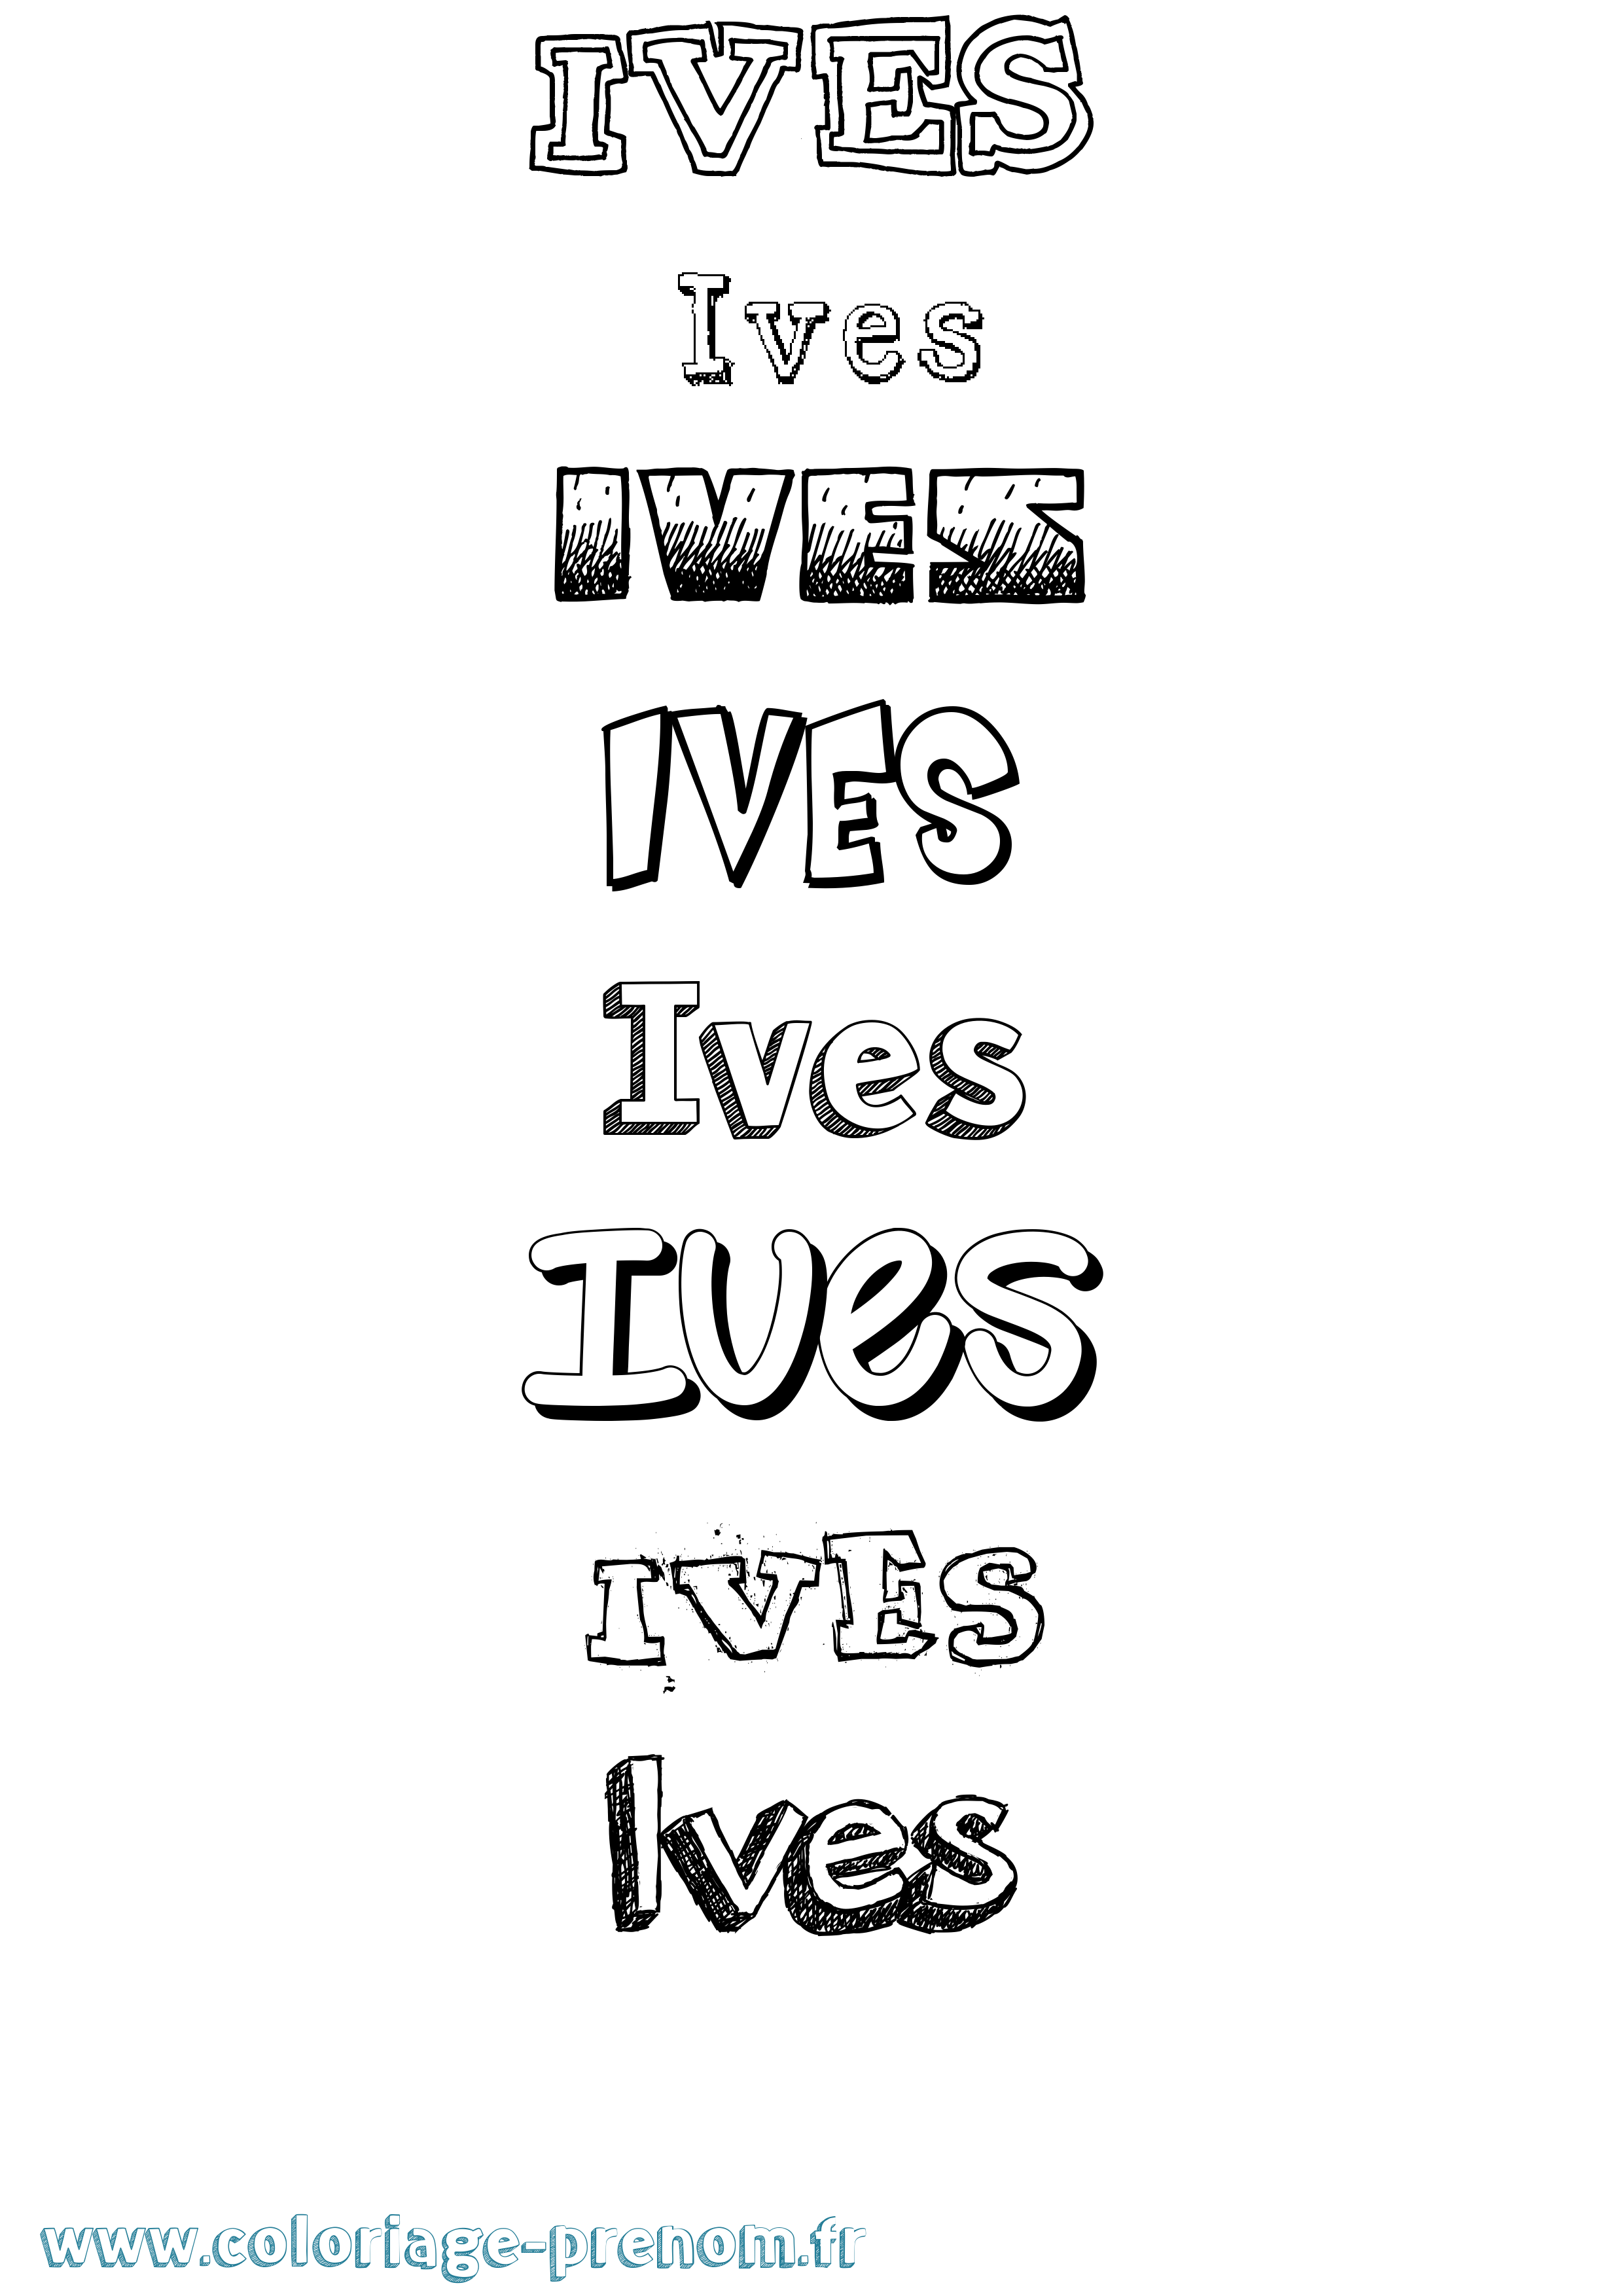 Coloriage prénom Ives Dessiné